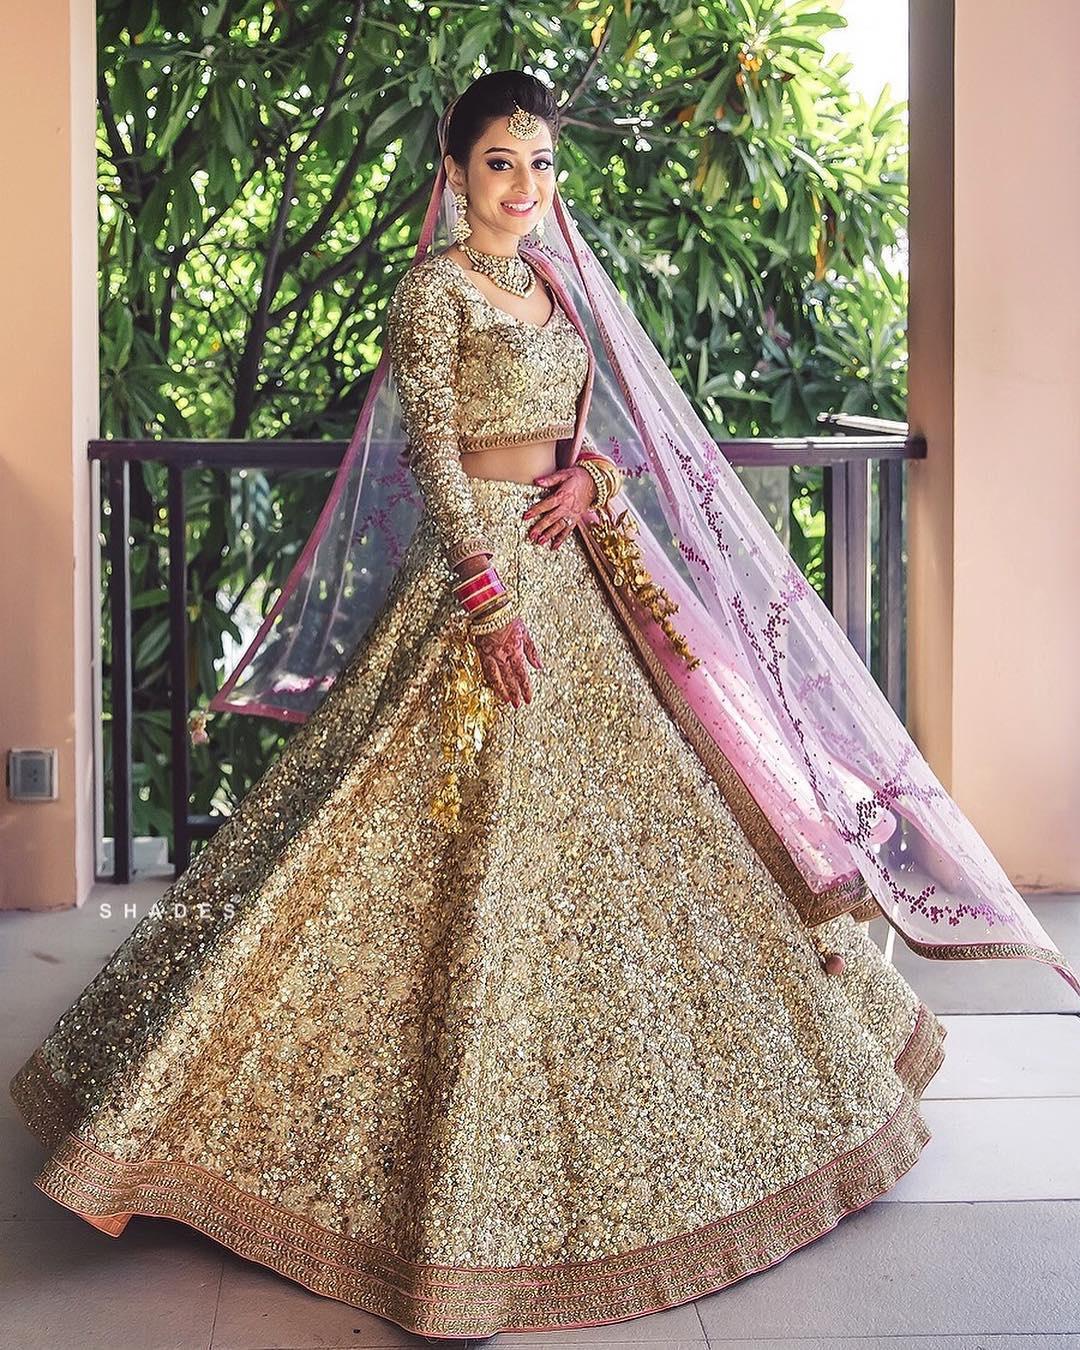 Indian Wedding Dresses | DressedUpGirl.com